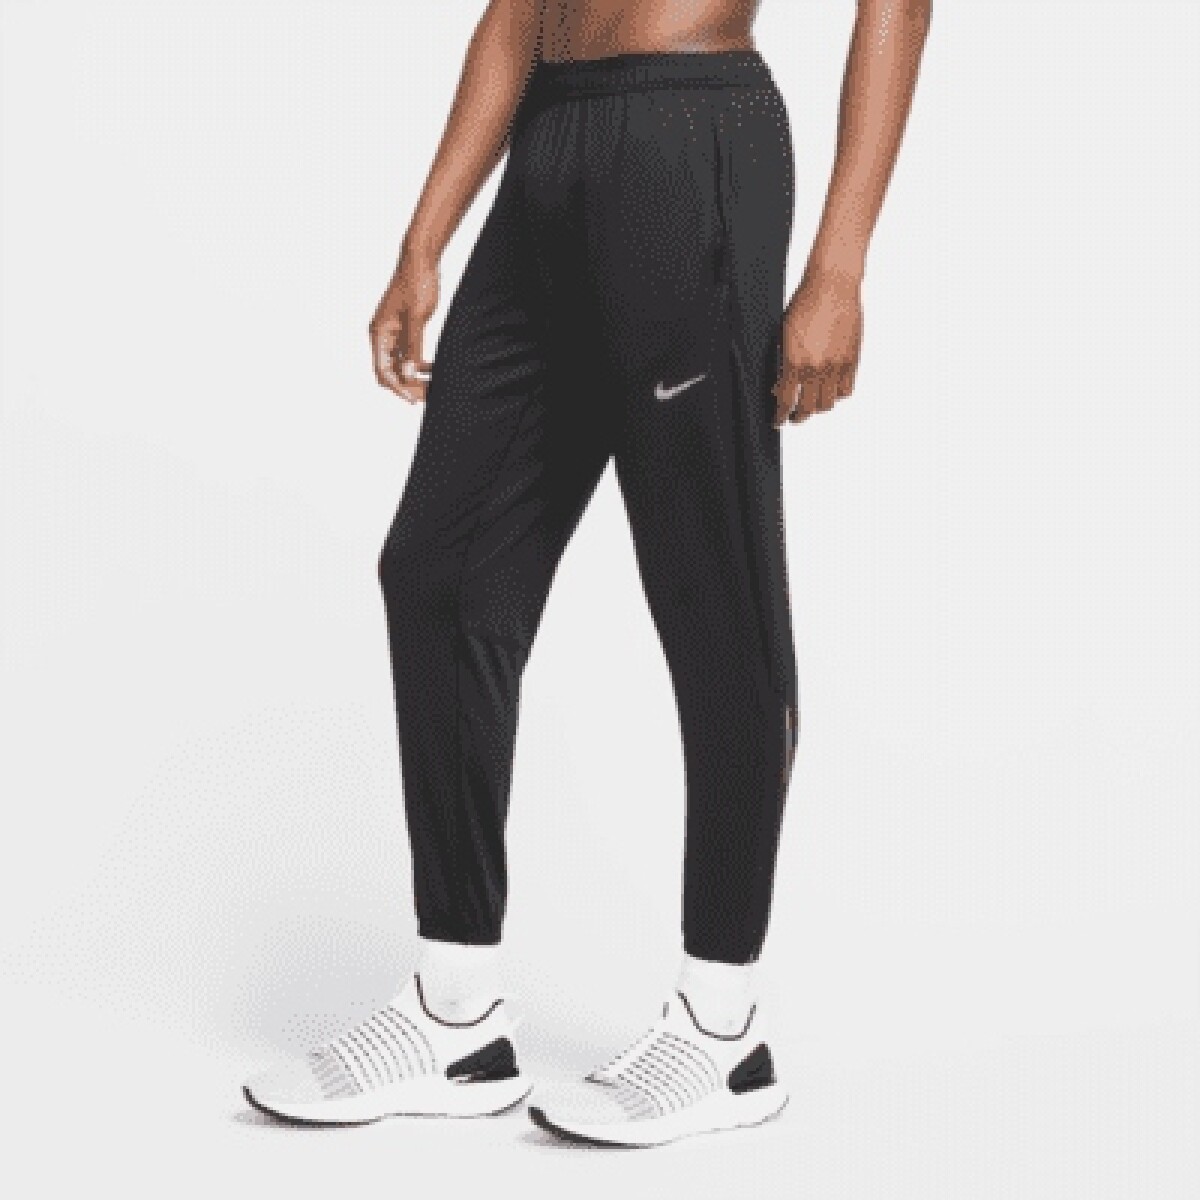 Pantalon Nike Running Hombre Essential Knit - Color Único 